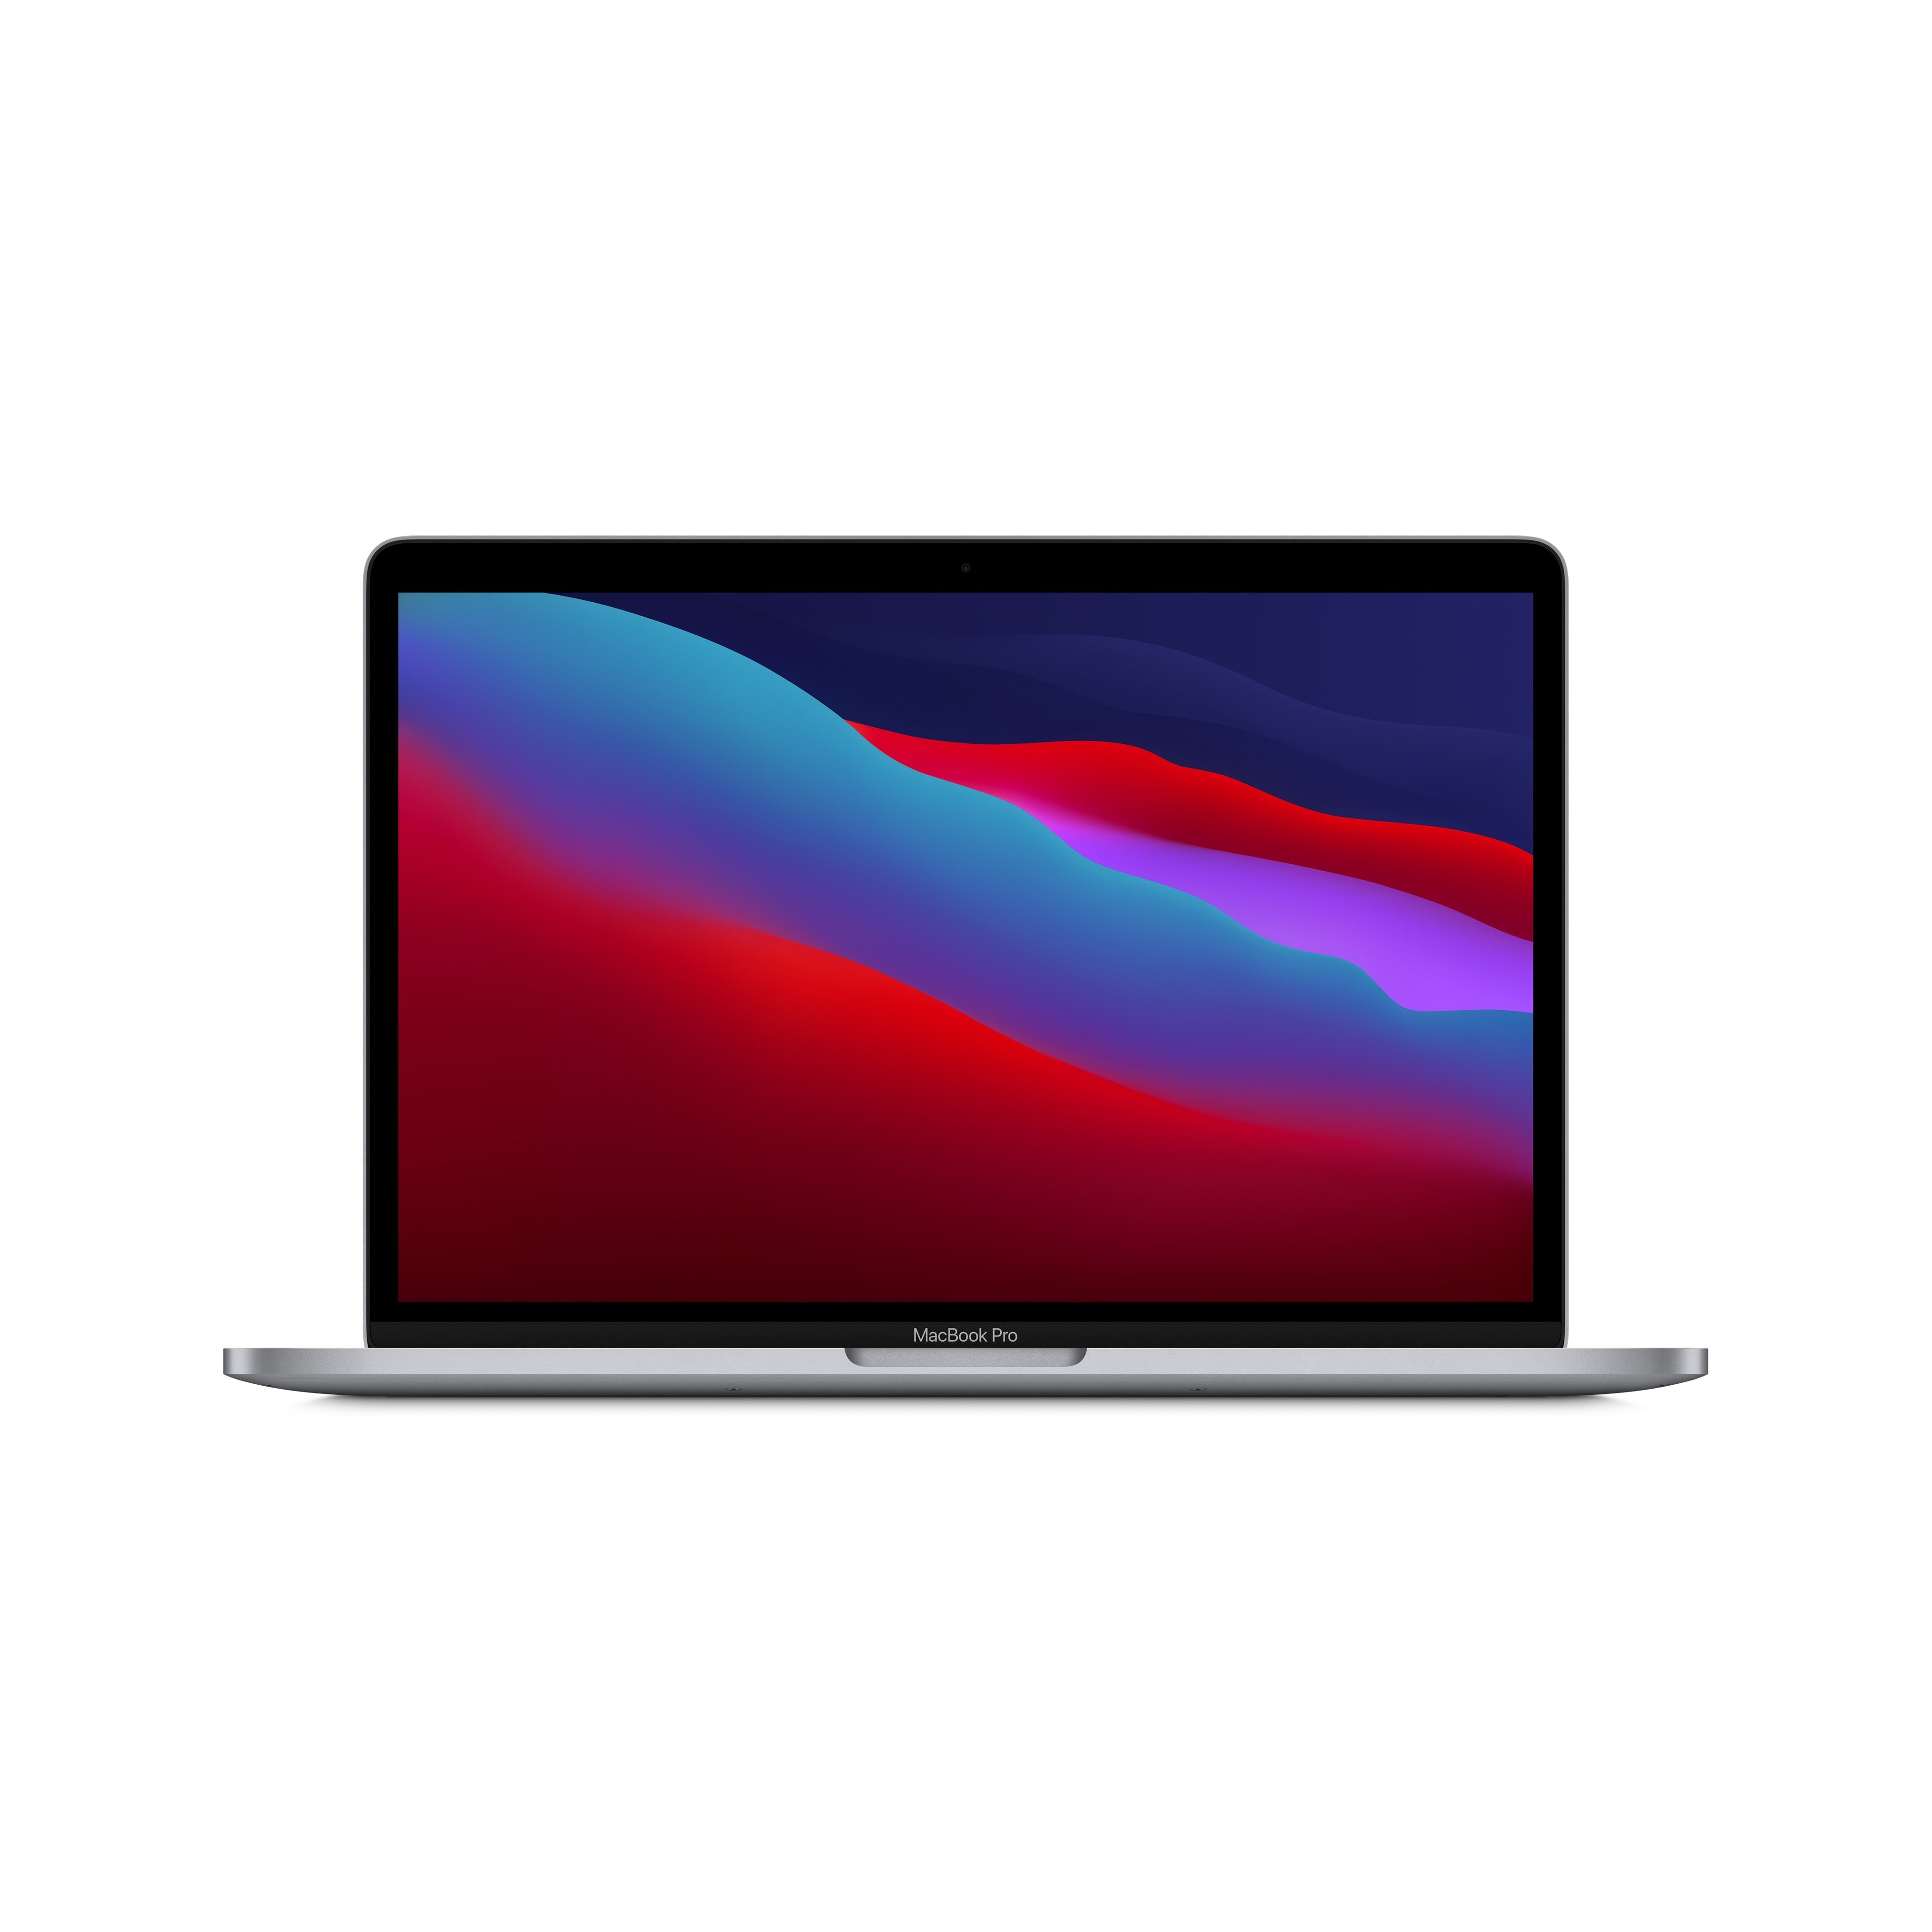 MacBook Pro (13-inch, 2020 M1 Pro) (Brand New)